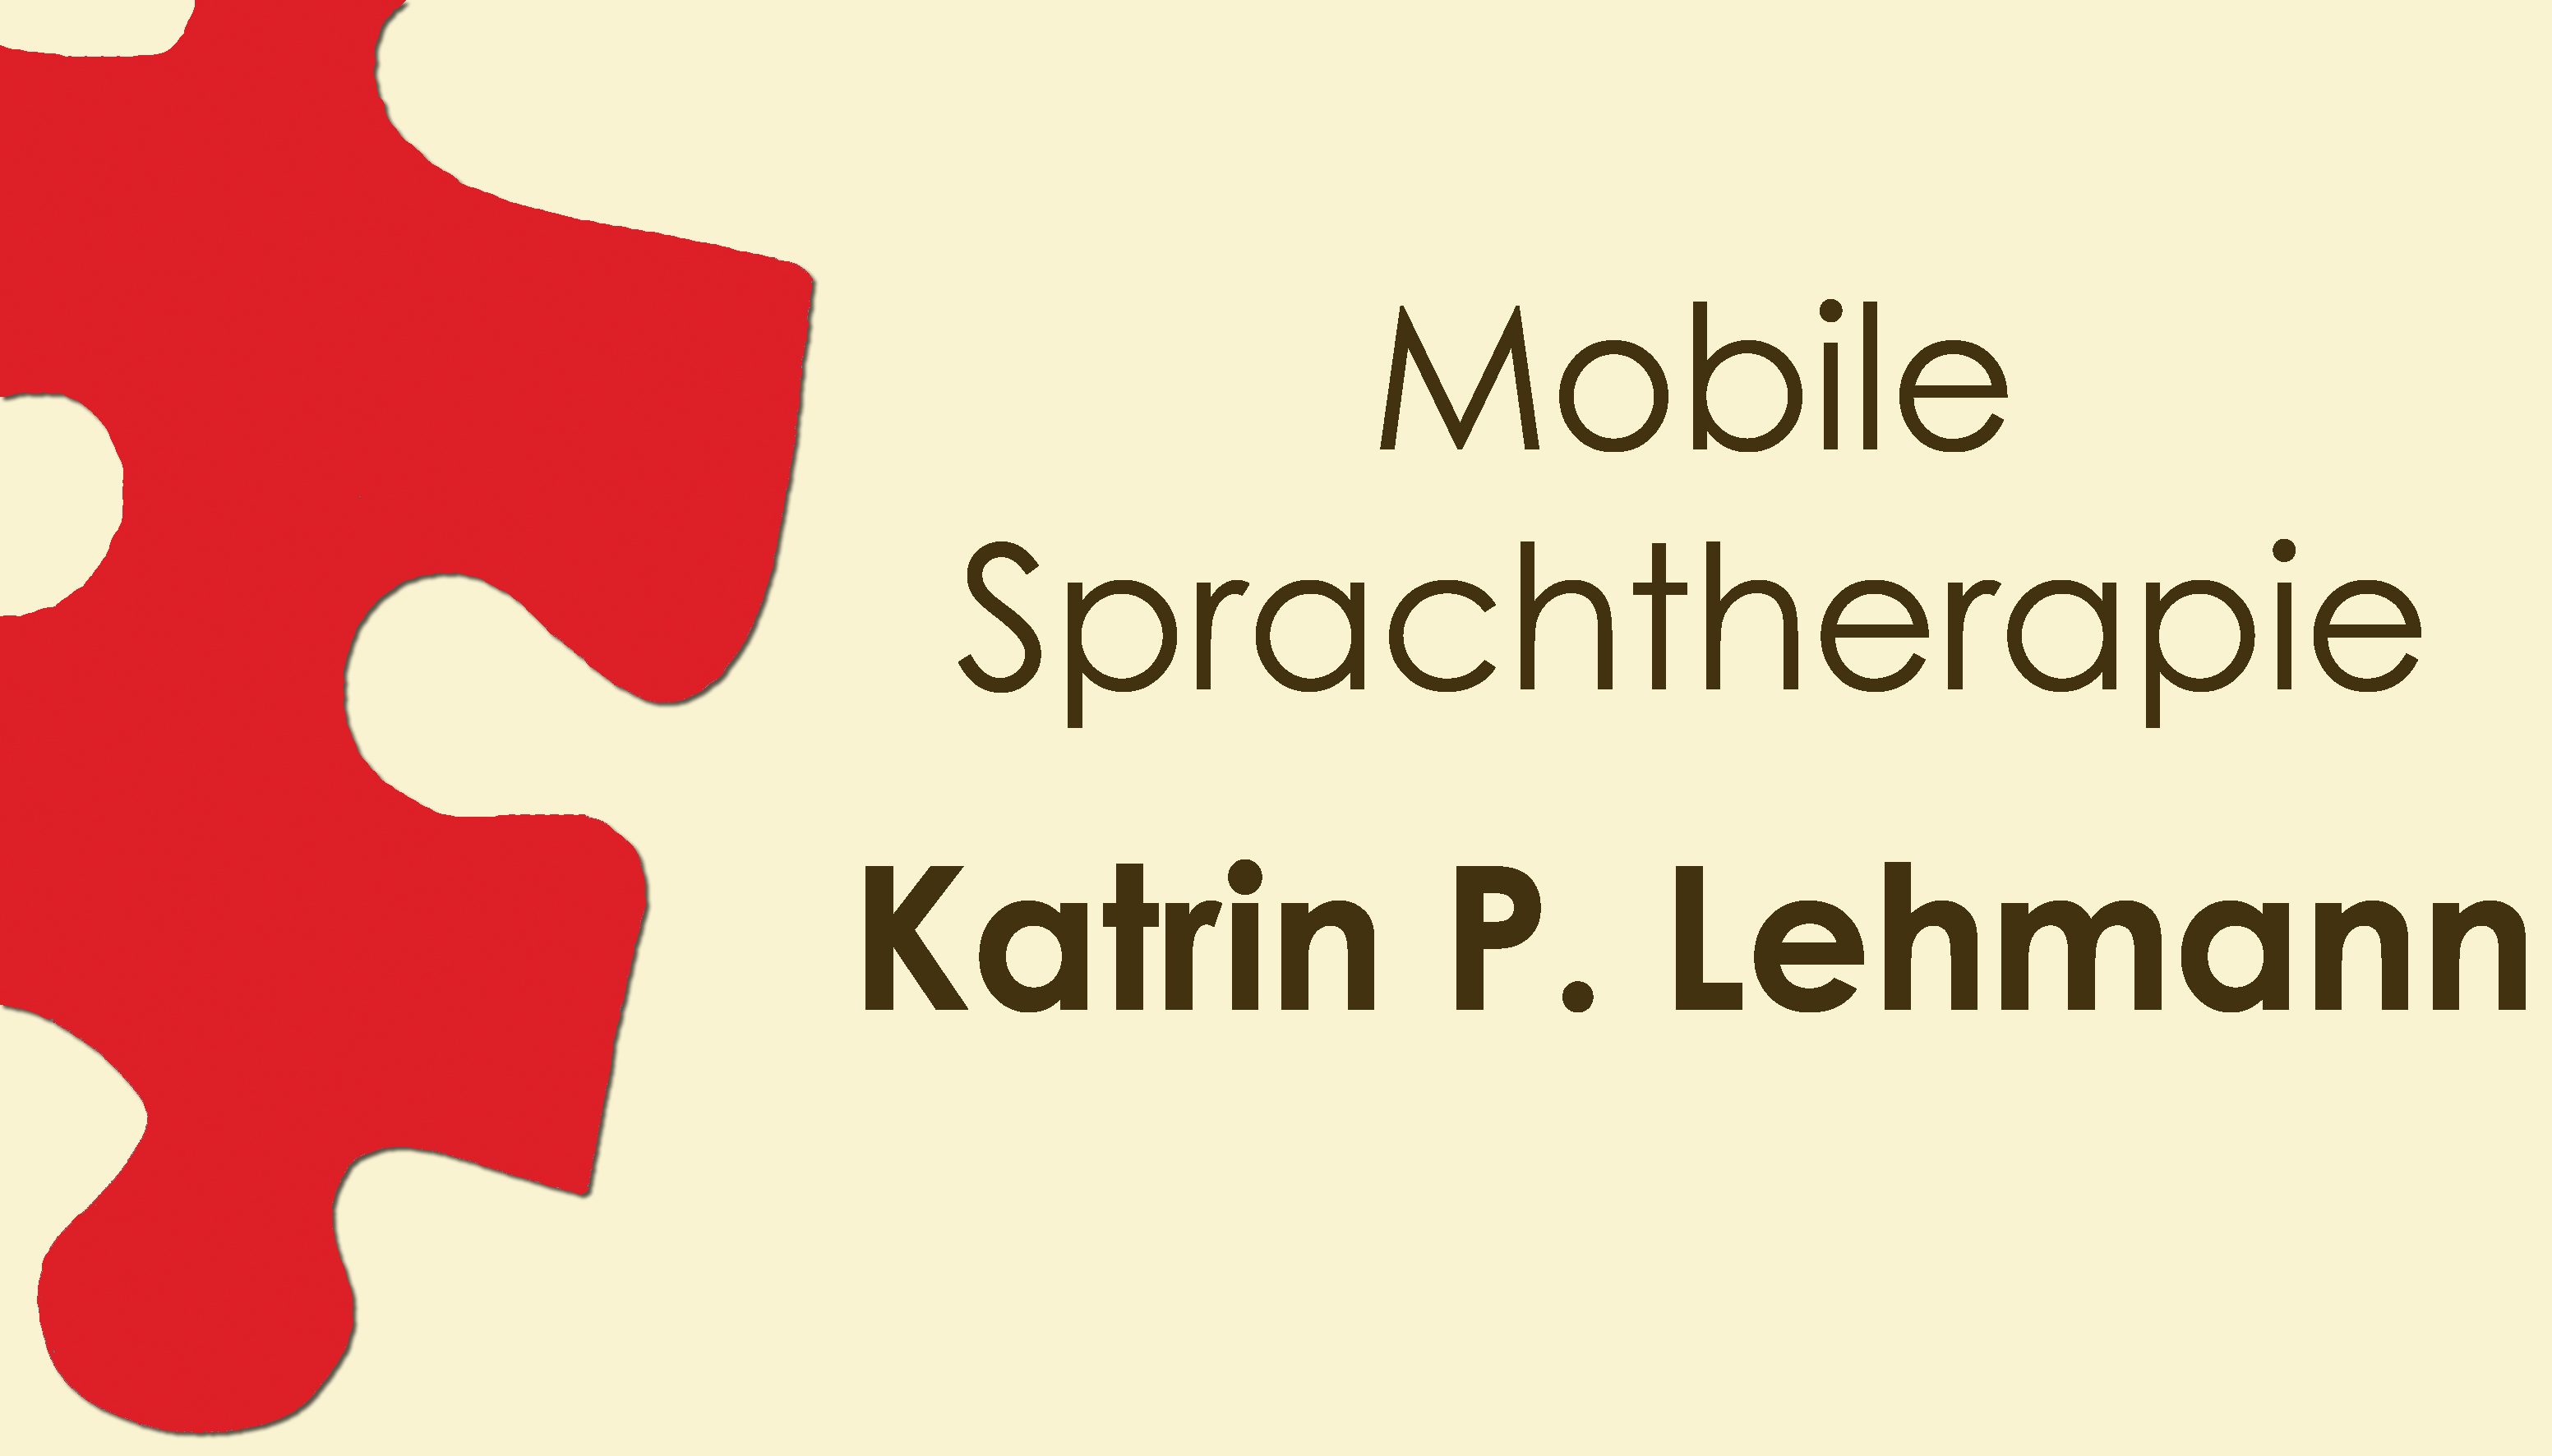 Mobile Sprachtherapie Katrin P. Lehmann